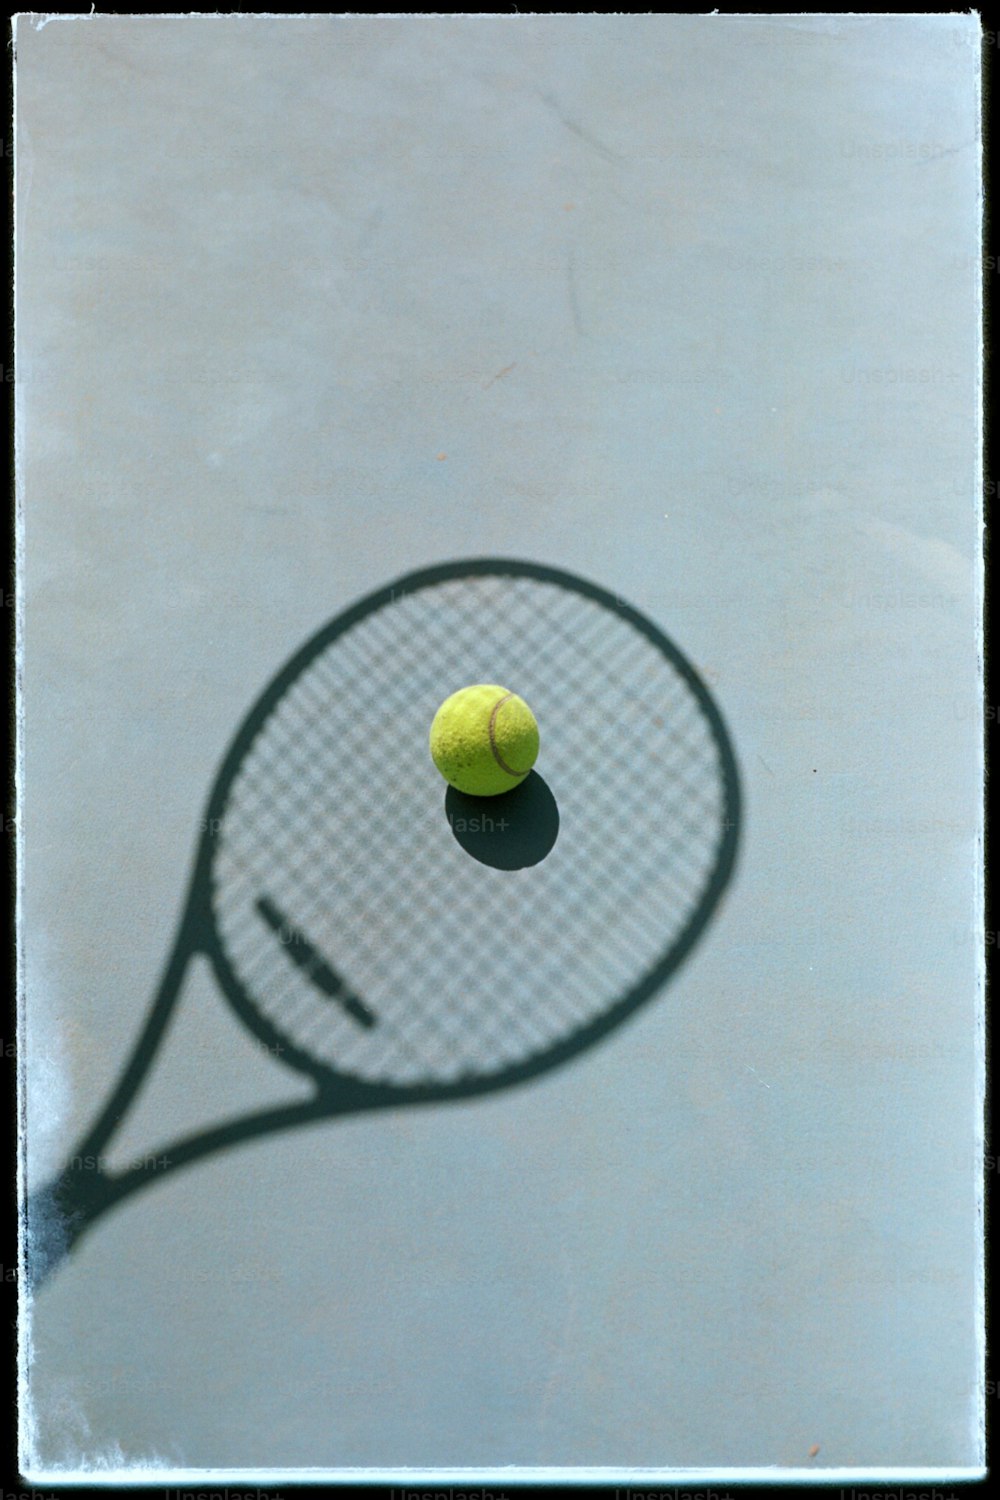 la sombra de una raqueta de tenis y una pelota de tenis